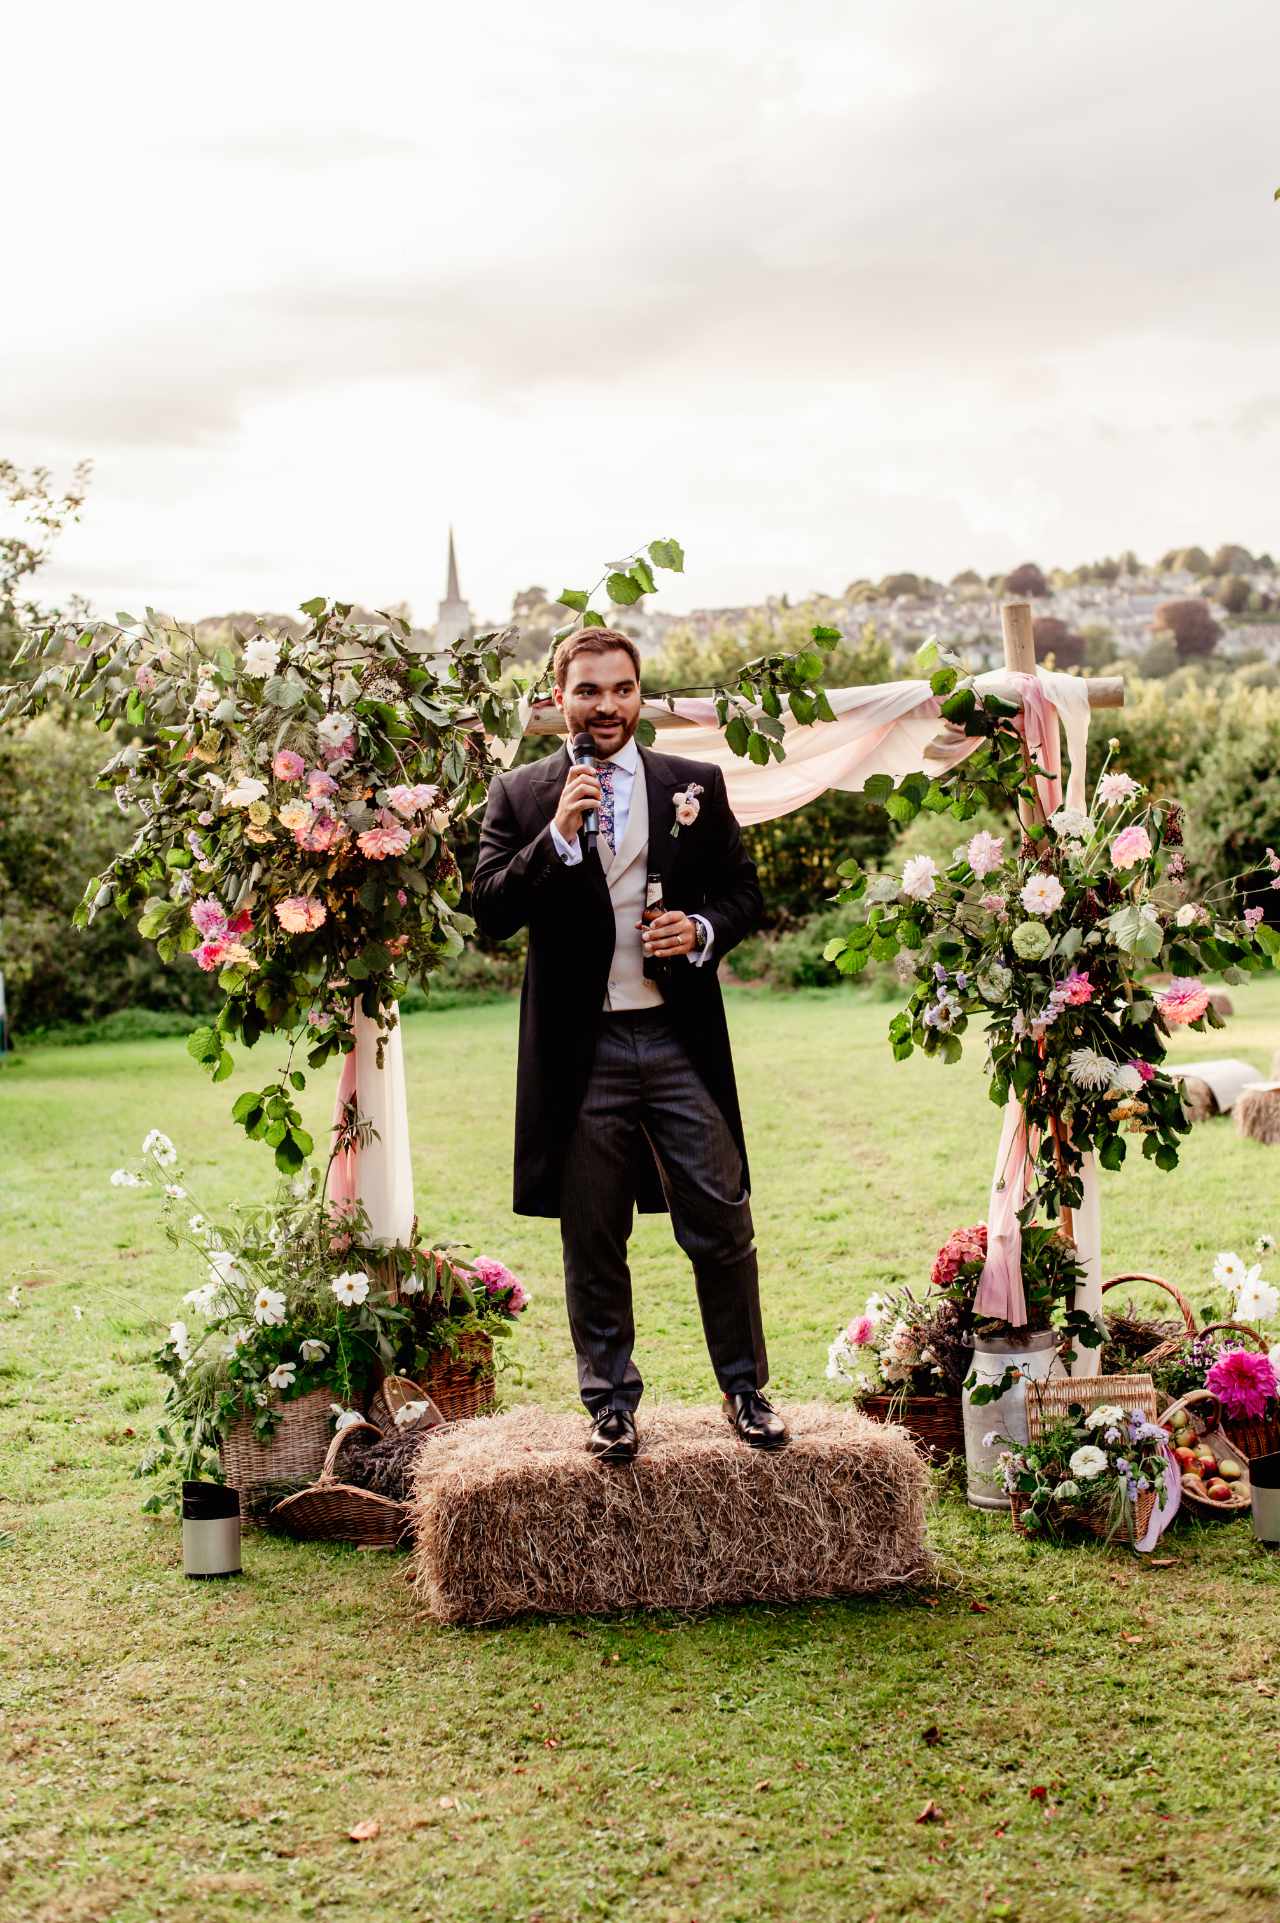 Wedding speech on hay bale with flowers